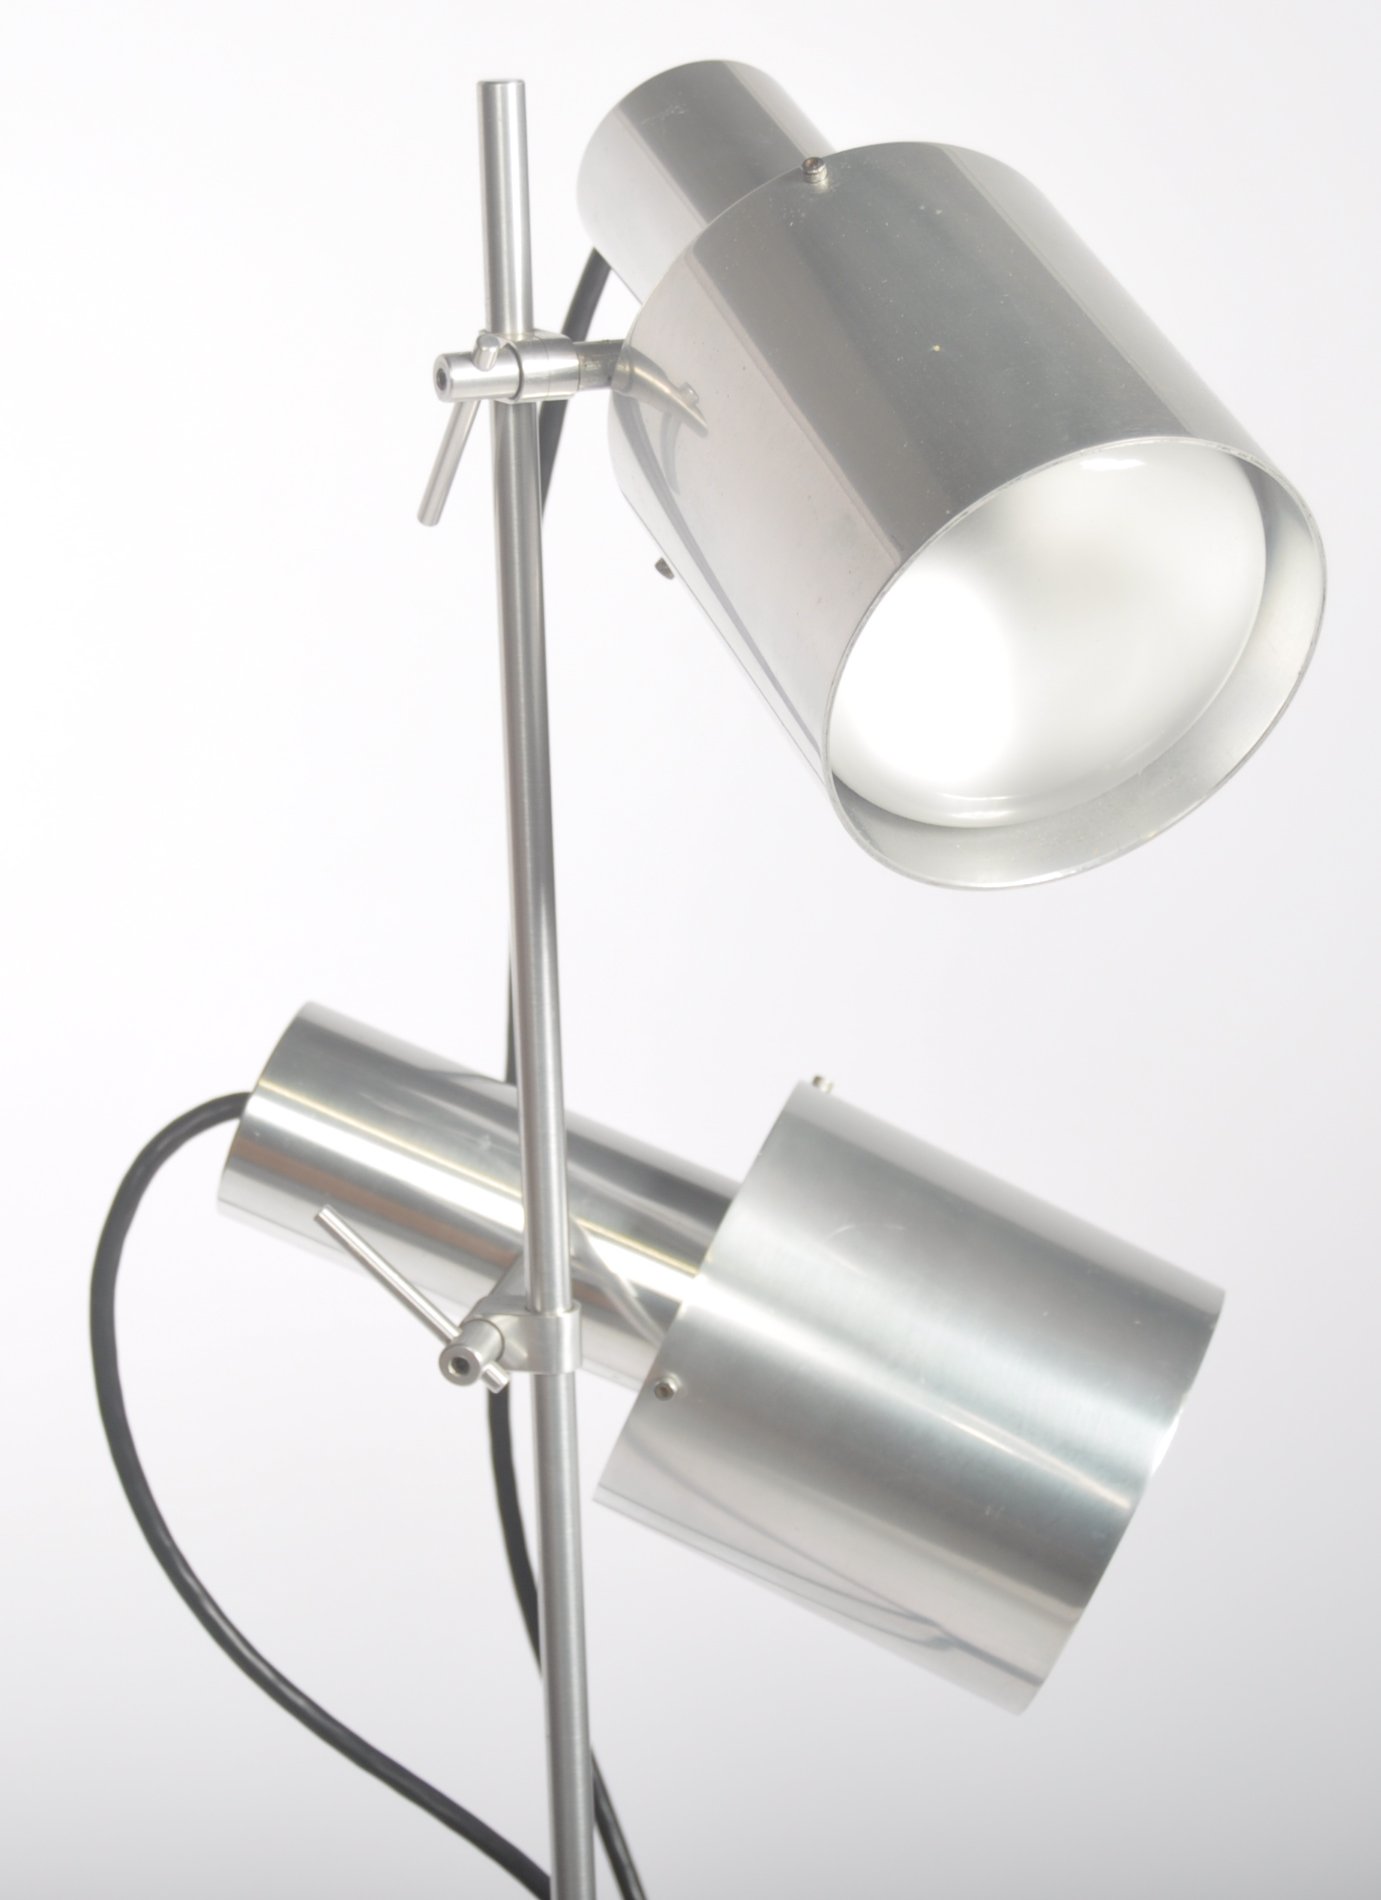 ORIGINAL 20TH CENTURY RETRO FLOOR STANDING TWIN SPOTLIGHT LAMP - Image 2 of 5